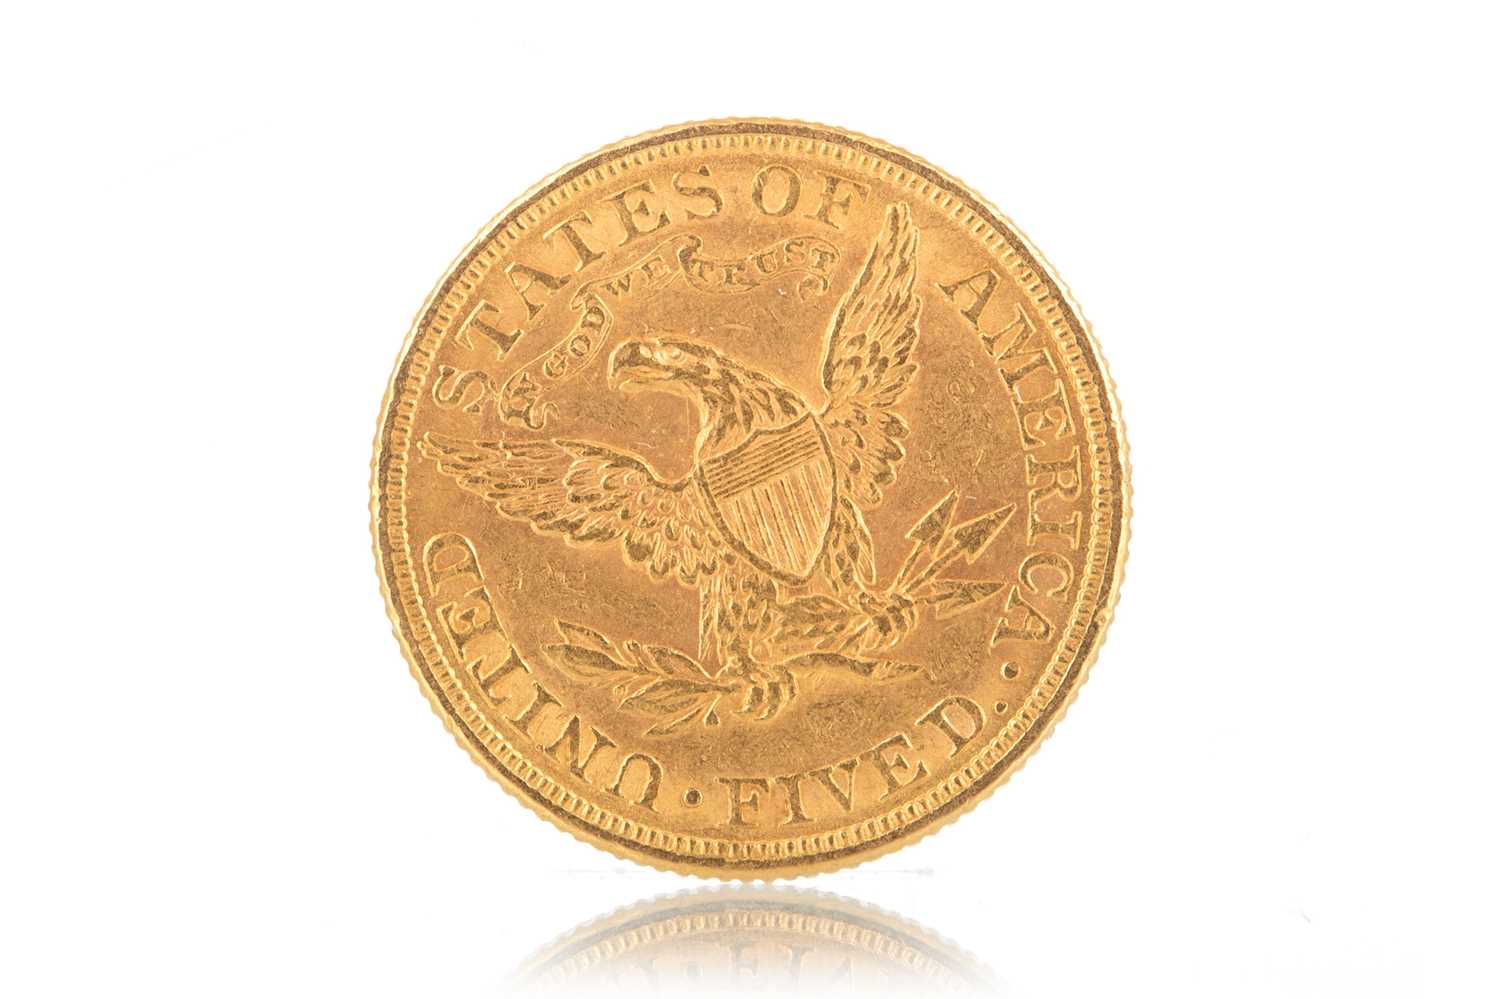 AMERICAN LIBERTY HEAD GOLD FIVE DOLLAR COIN